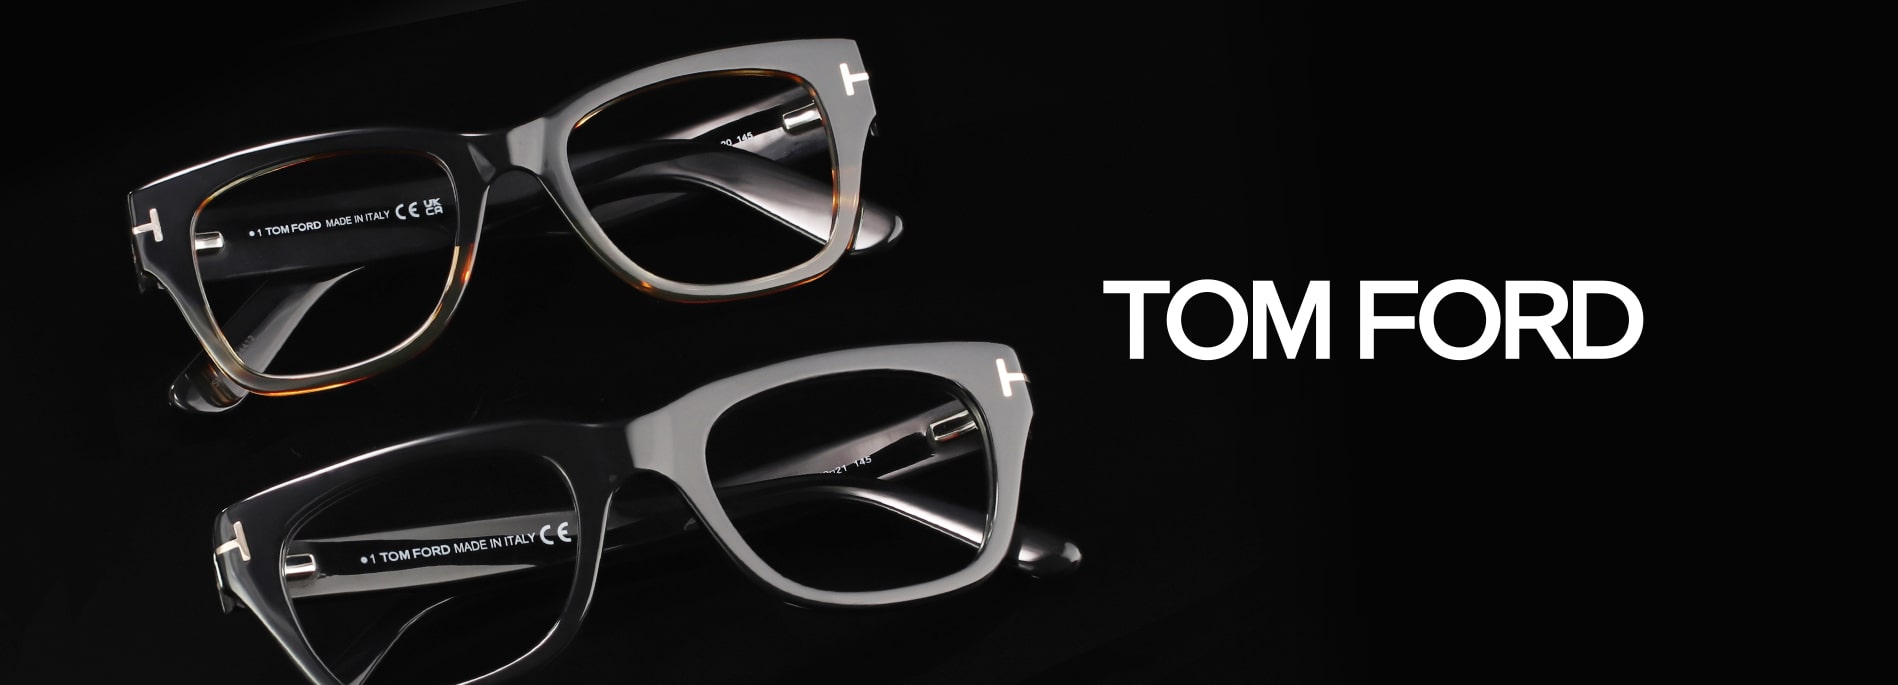 Introducing luxury Tom Ford eyewear - Glasses Direct